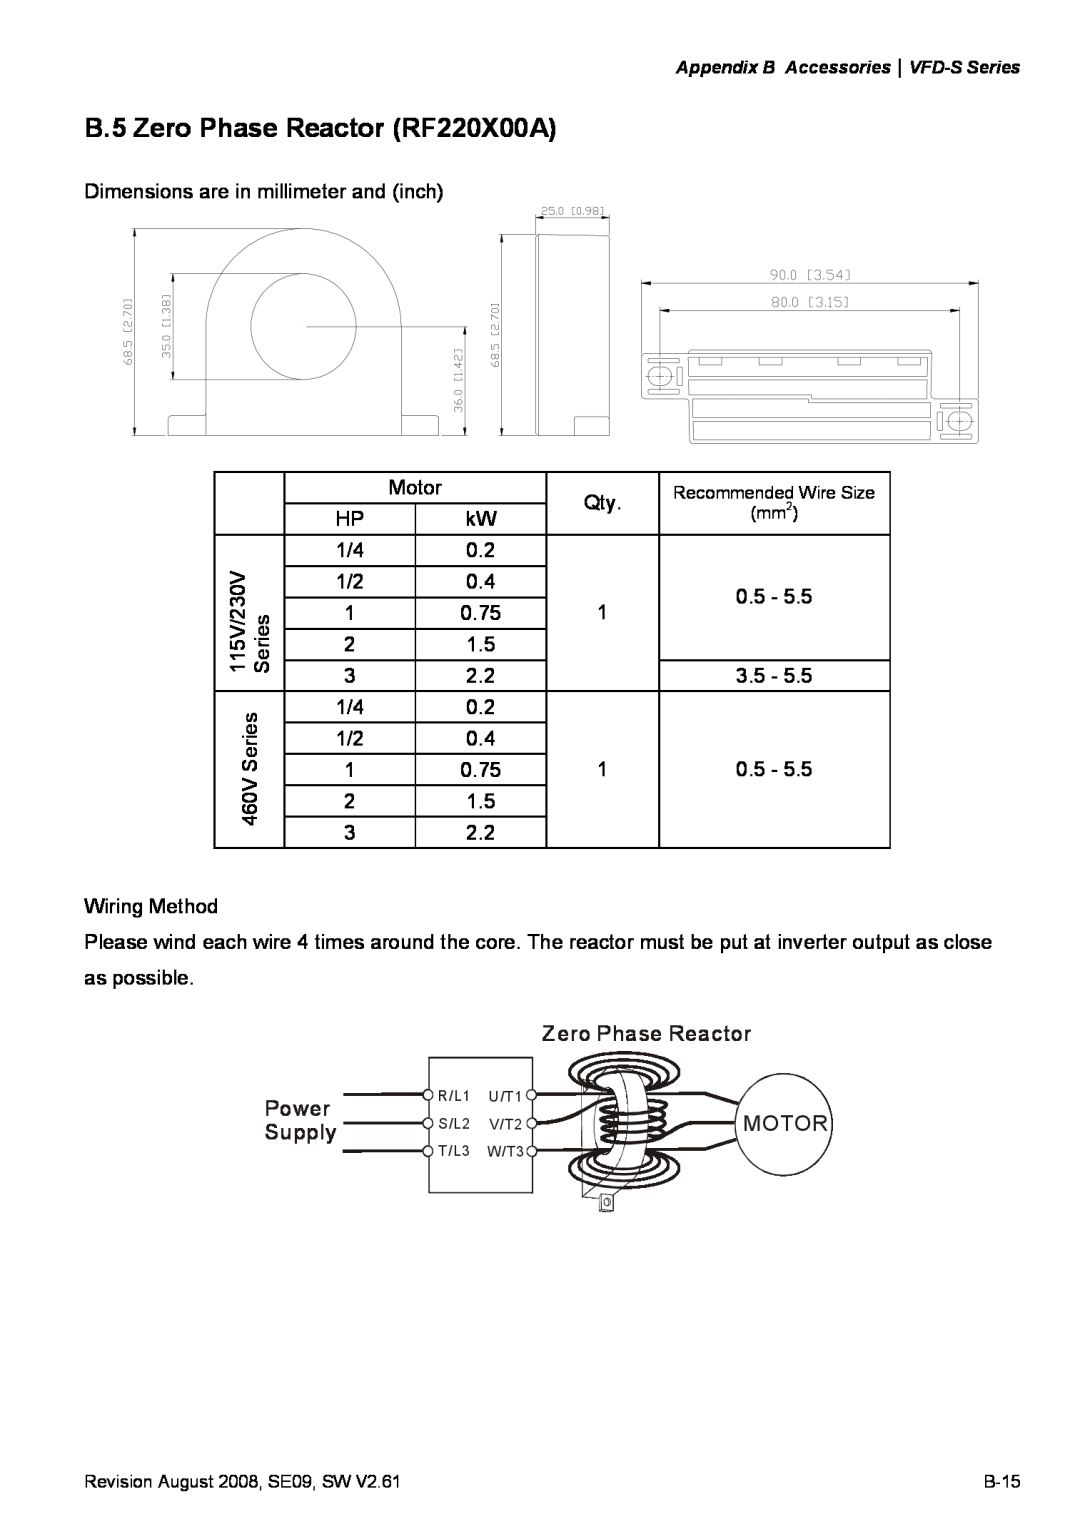 Delta Electronics VFD-S manual B.5 Zero Phase Reactor RF220X00A, Power, Supply 